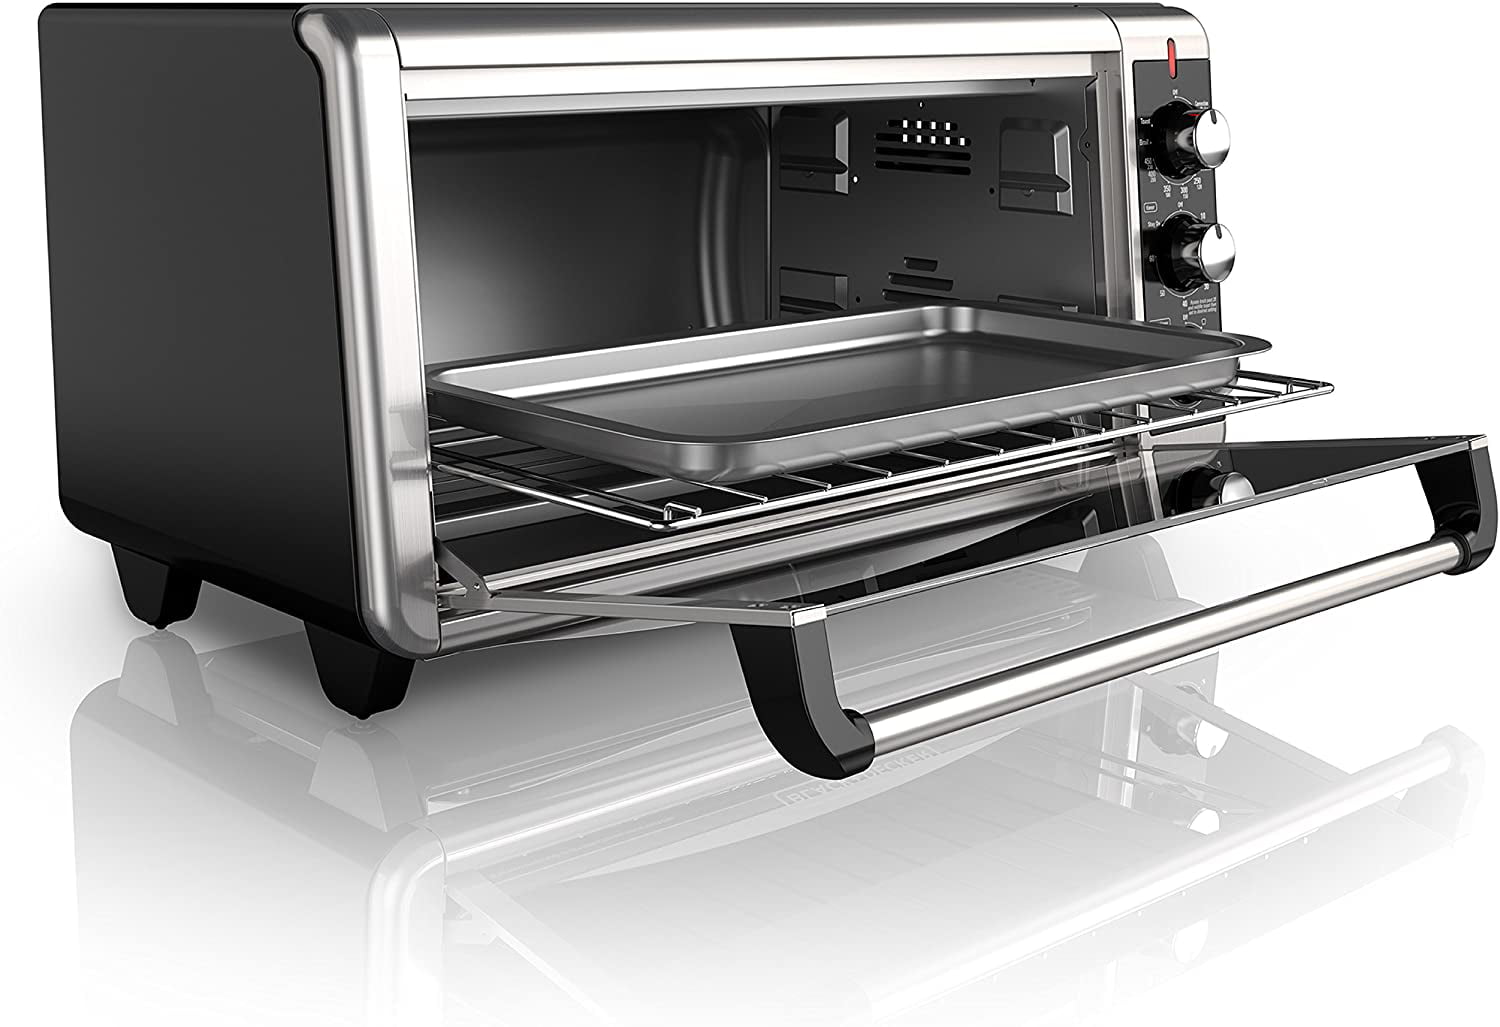 Black & Decker Small Toaster Oven 8 X 15.5 for Sale in Hemet, CA - OfferUp